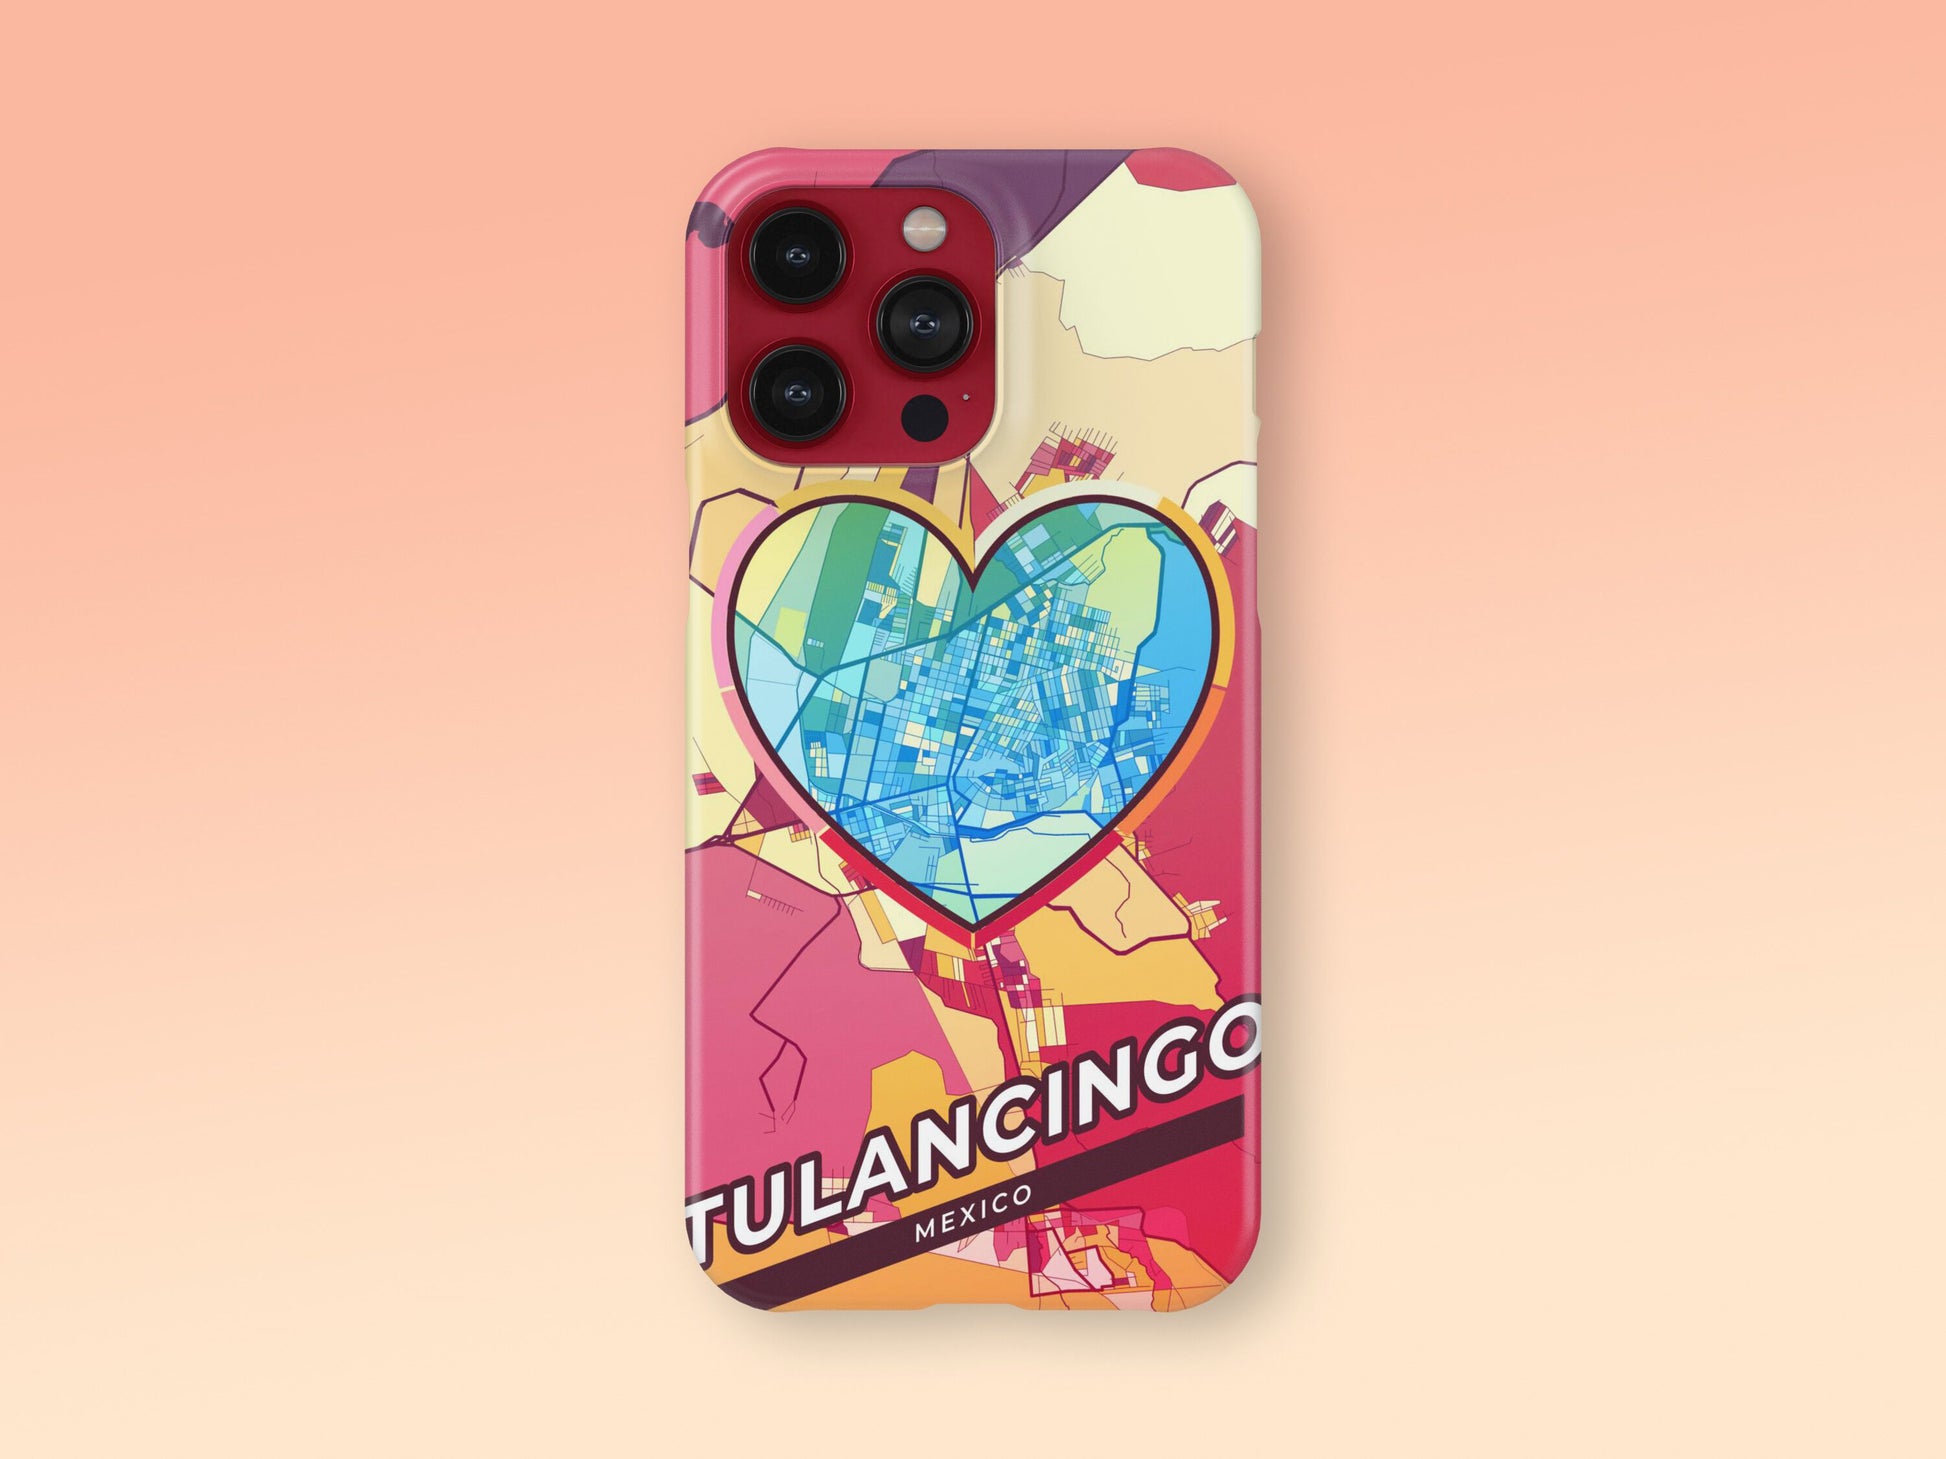 Tulancingo Mexico slim phone case with colorful icon 2